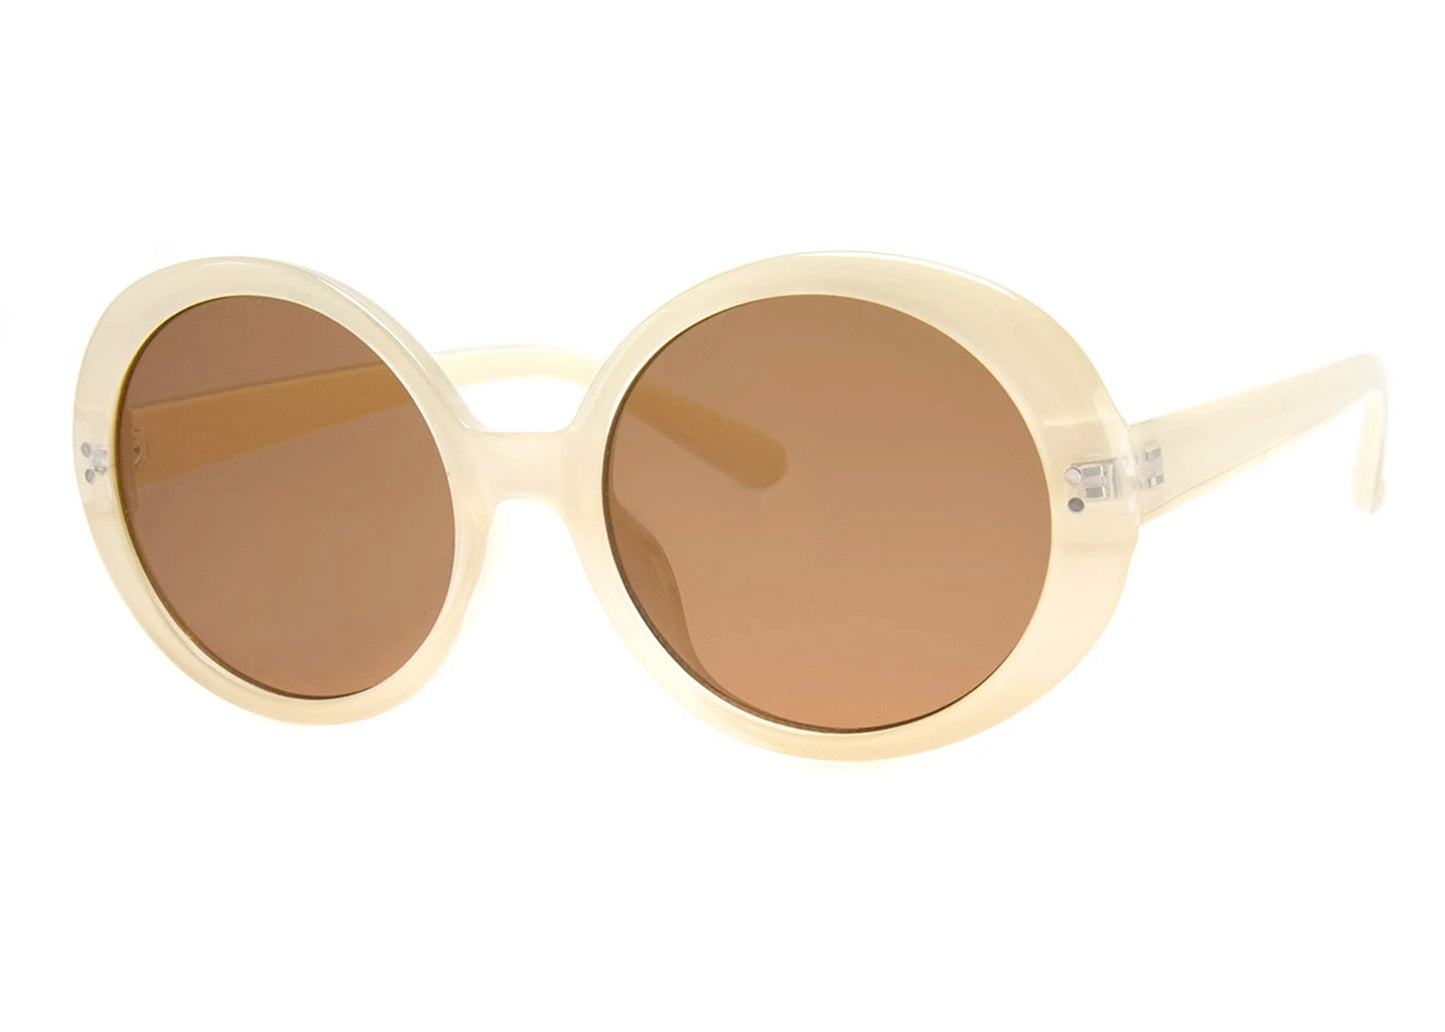 Romance Sunglasses in Cream